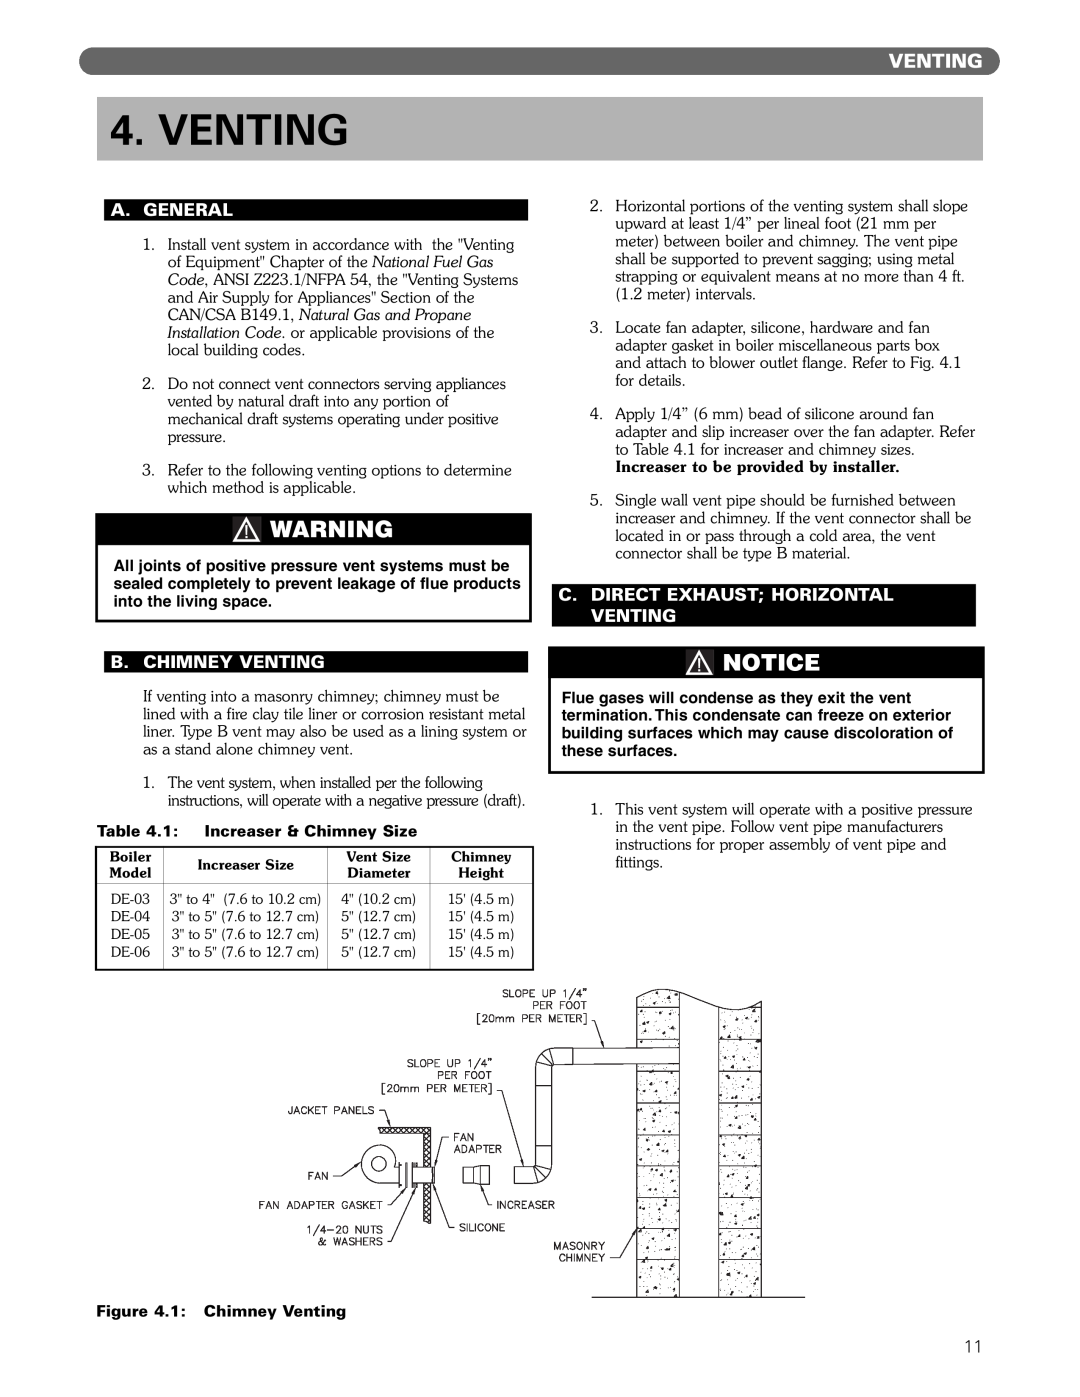 PB Heat DE manual A.General, B.Chimney Venting, C.Direct Exhaust Horizontal Venting 